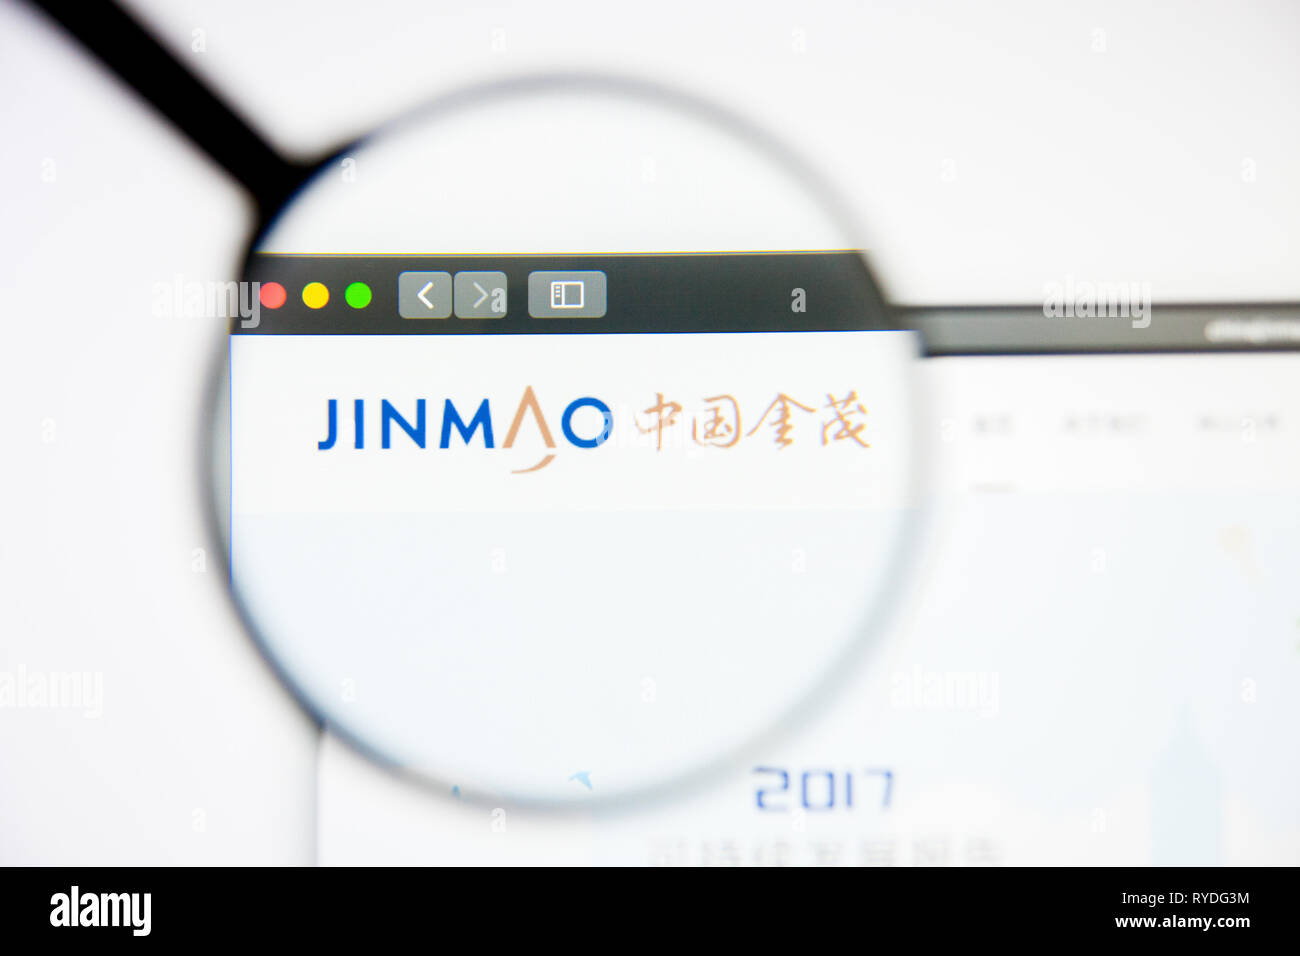 Los Angeles, California, USA - 5 March 2019: China Jinmao website homepage. China Jinmao logo visible on display screen, Illustrative Editorial Stock Photo